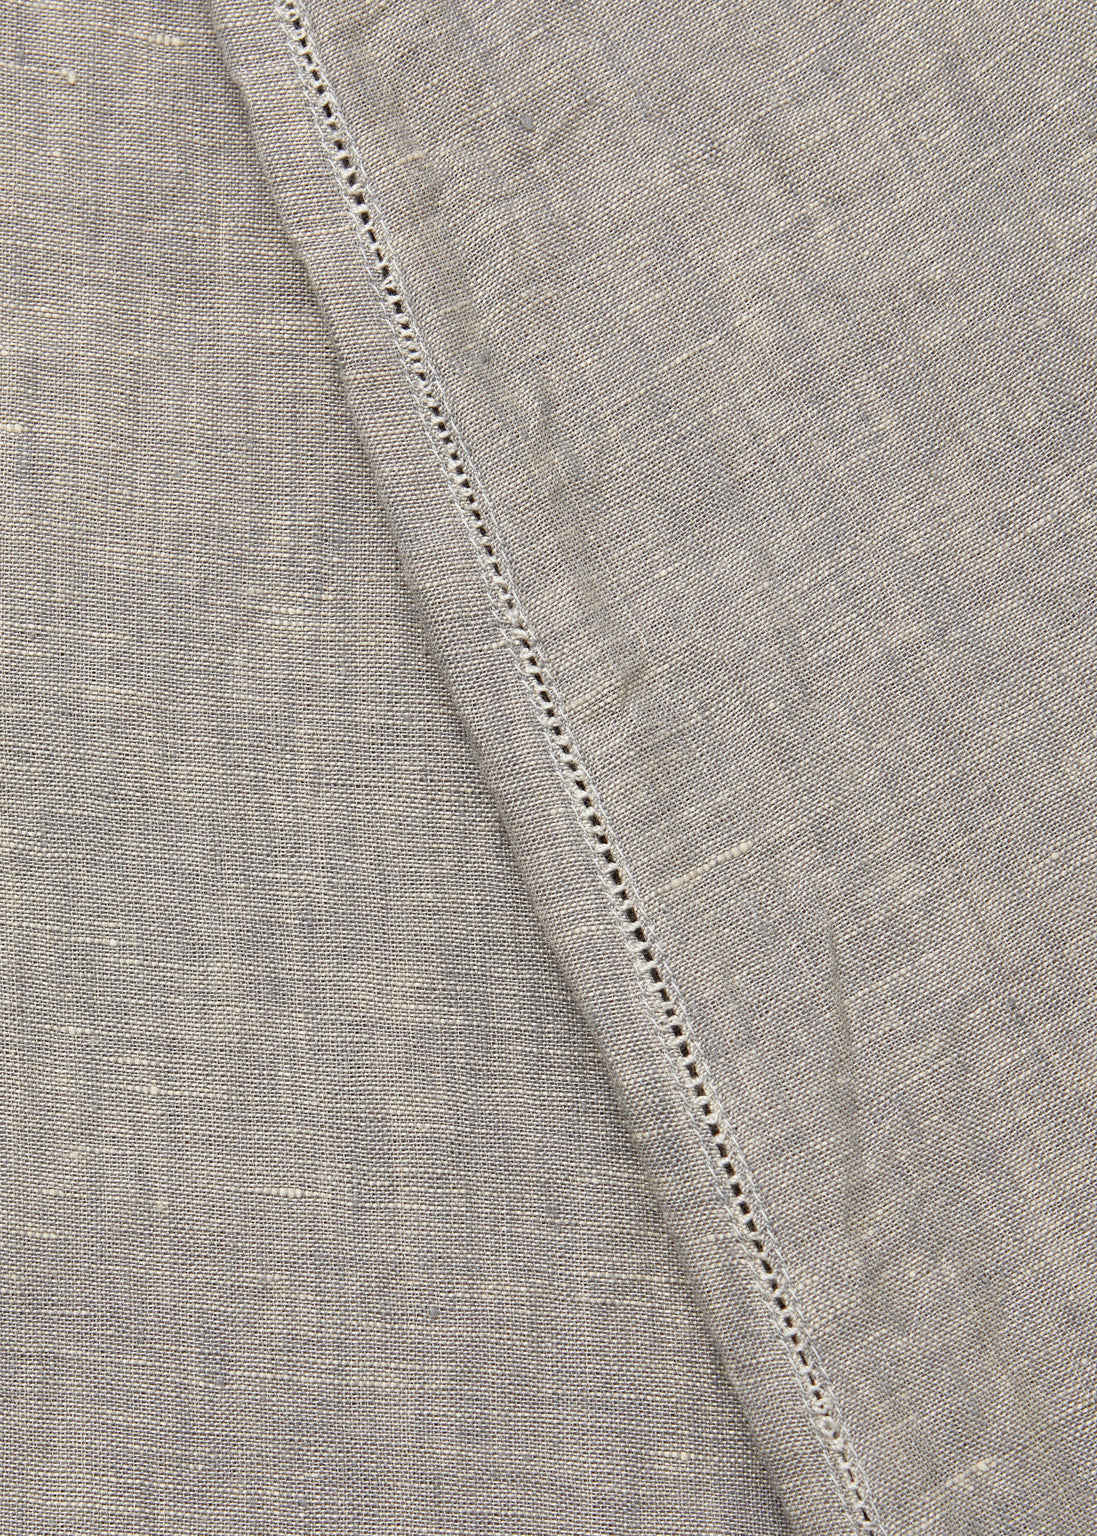 Strap dress linen | Grey